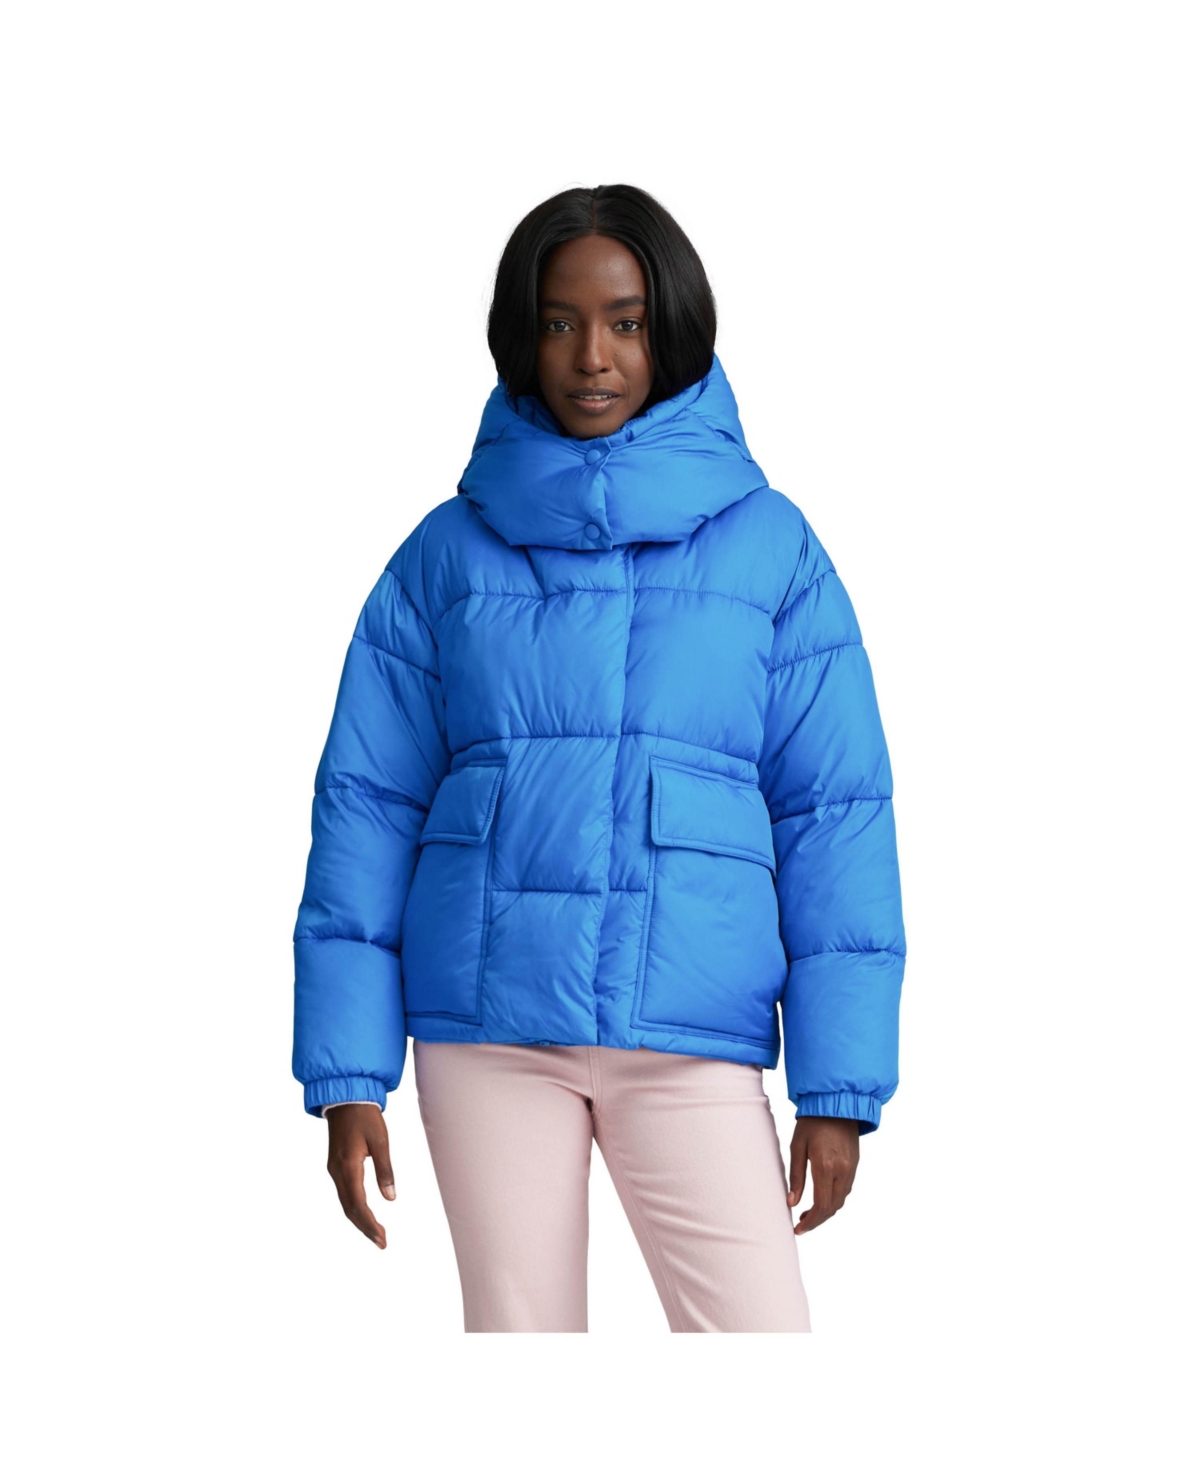 Women's Wonder Puff with Detachable Hood Jacket - Rust